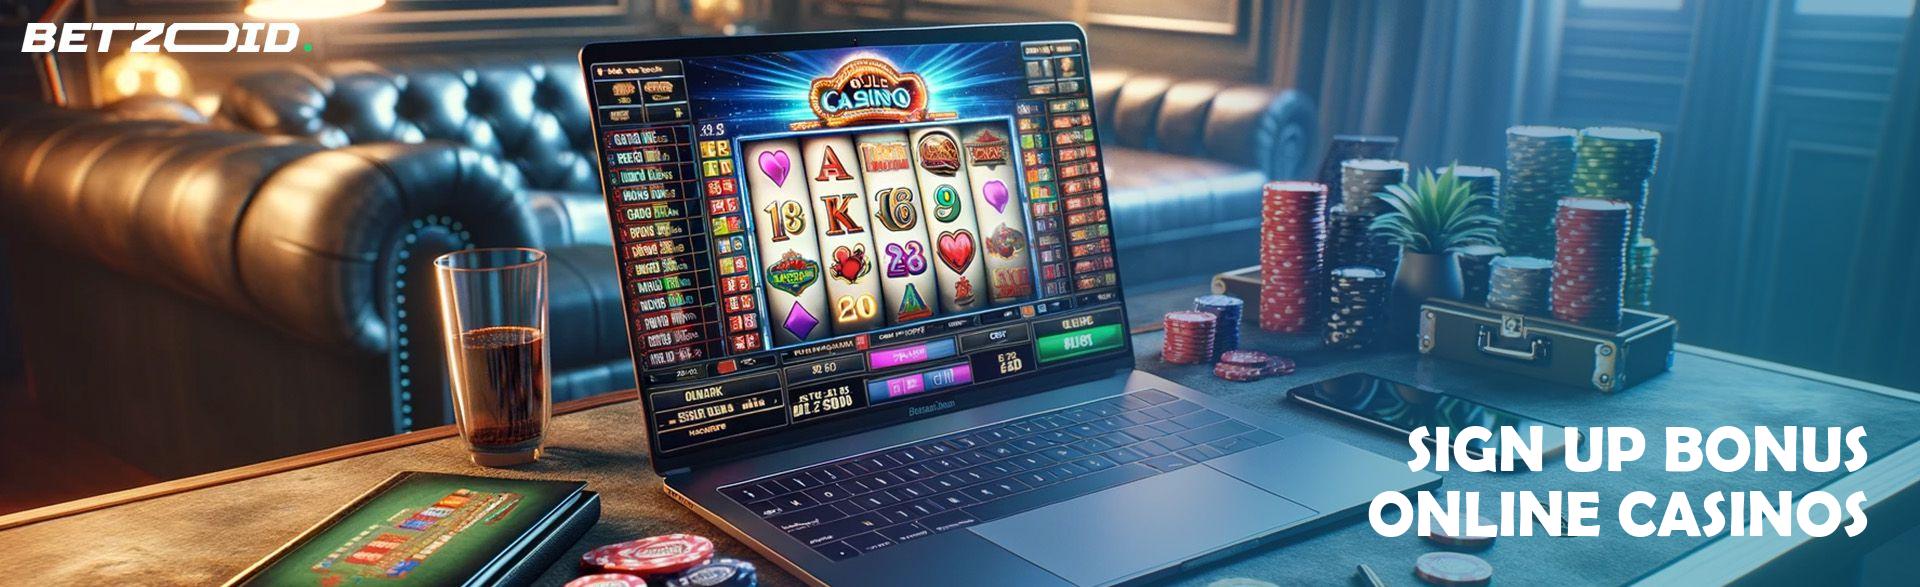 Sign Up Bonus Online Casinos.